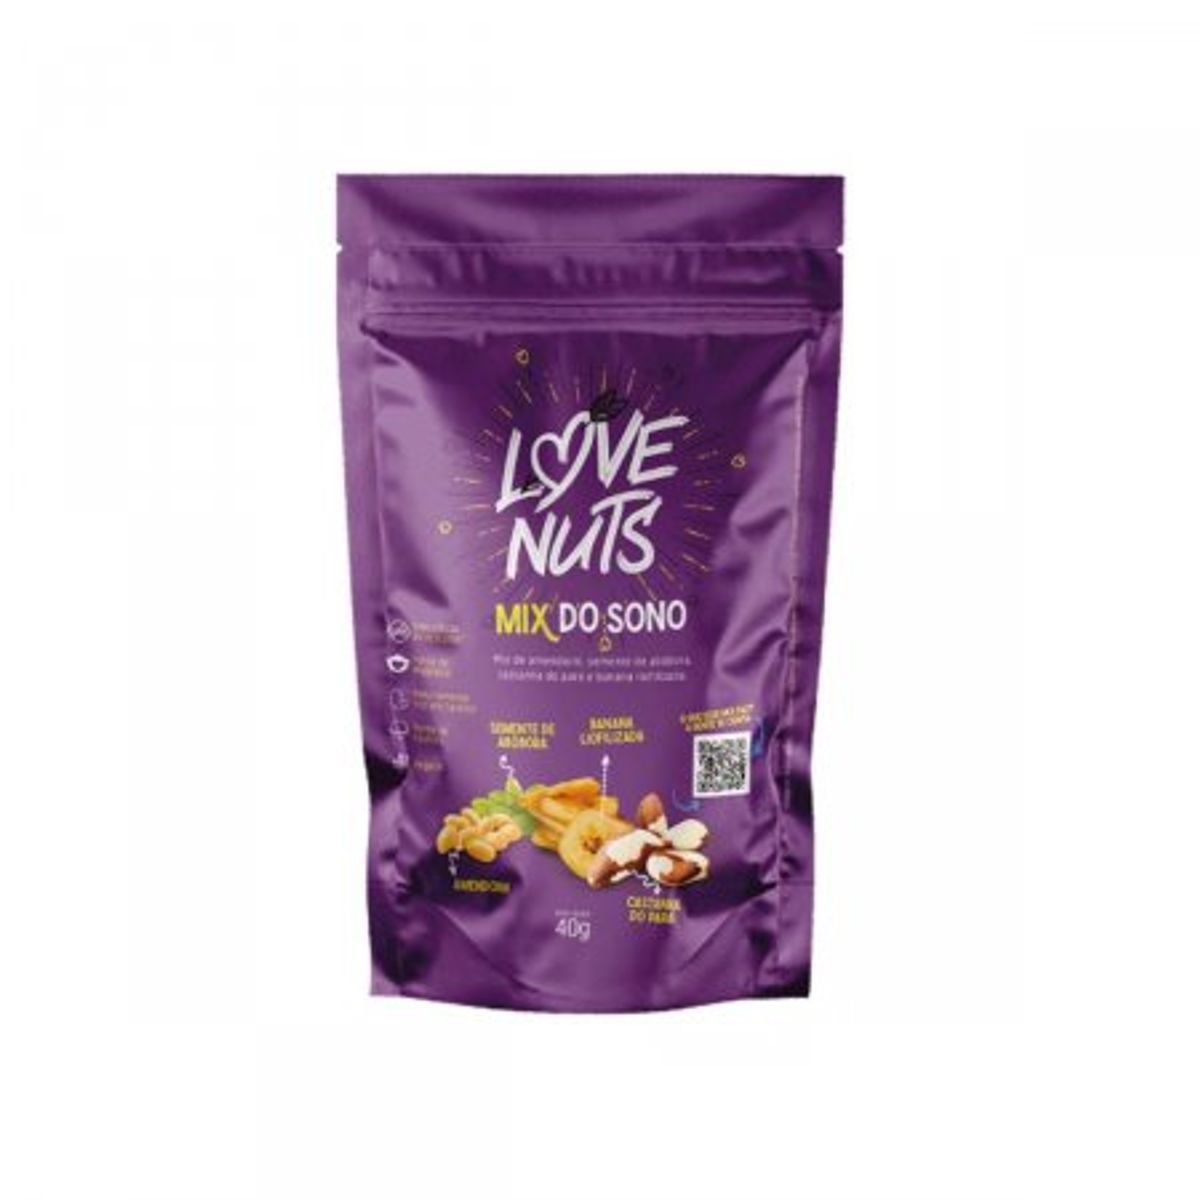 Mix do Sono Love Nuts 40g